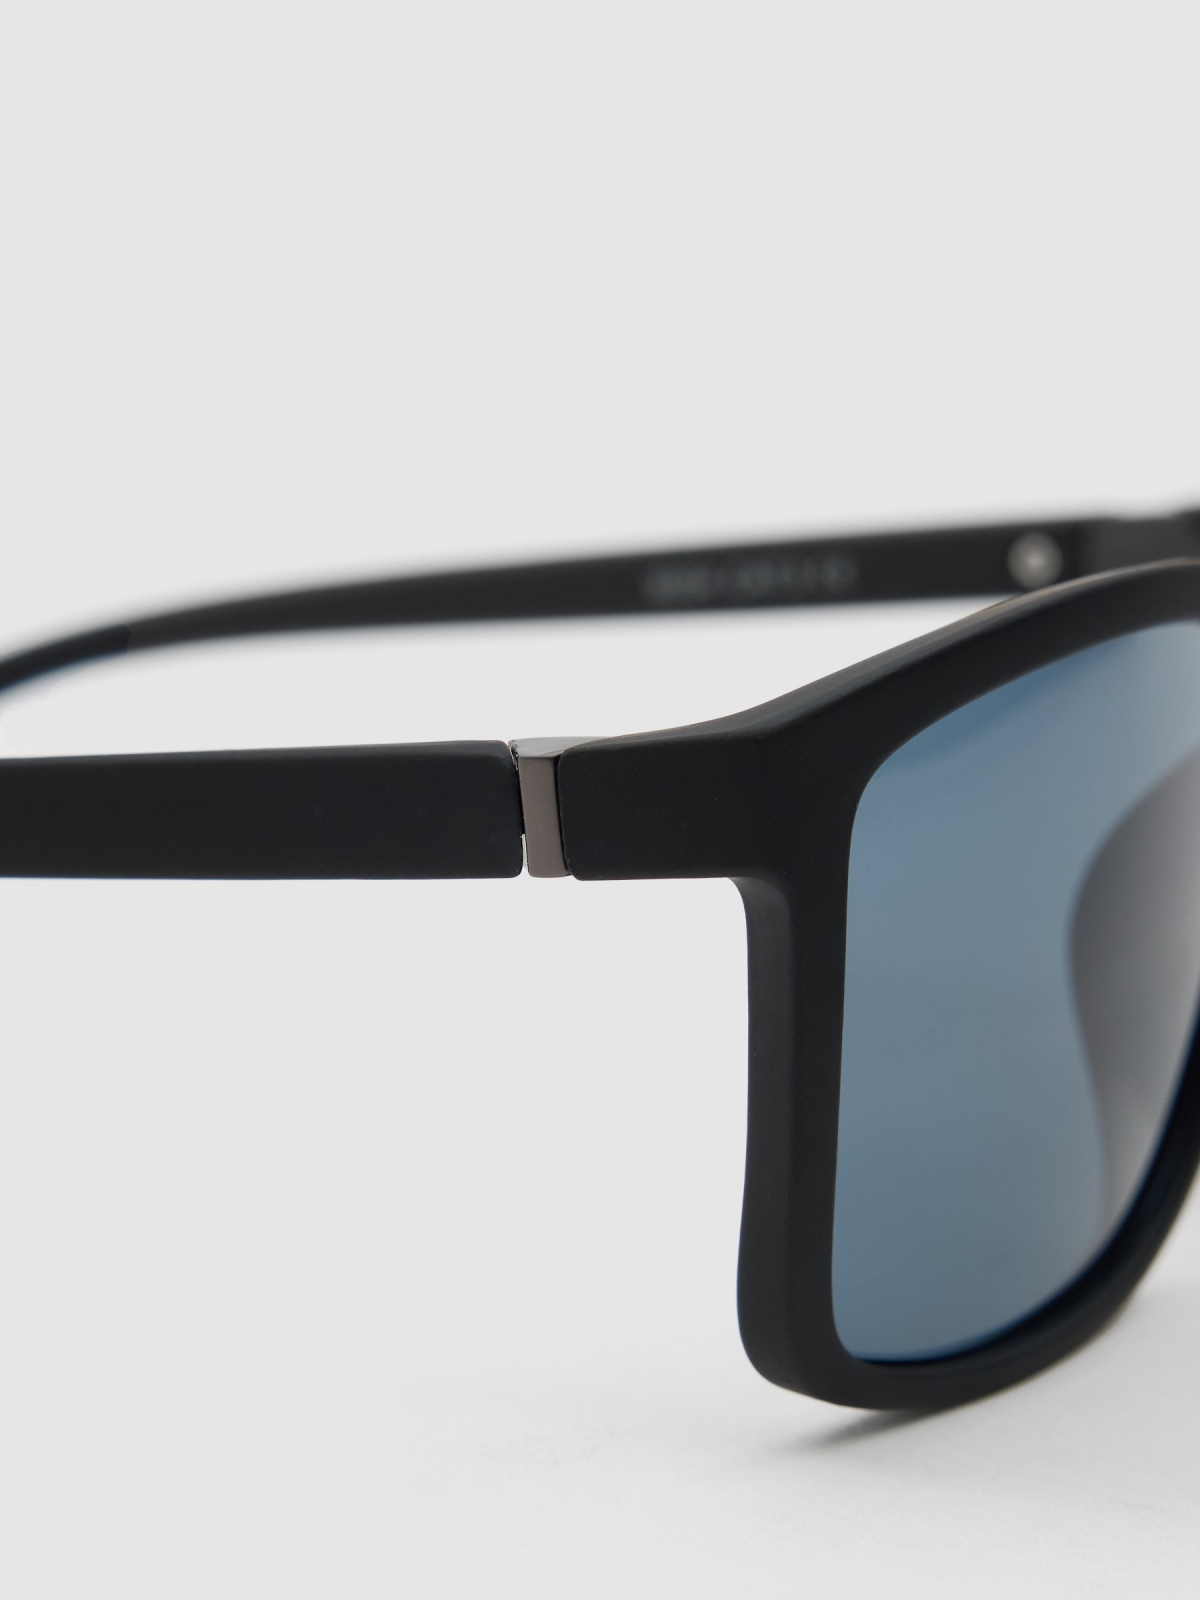 Basic sunglasses black detail view